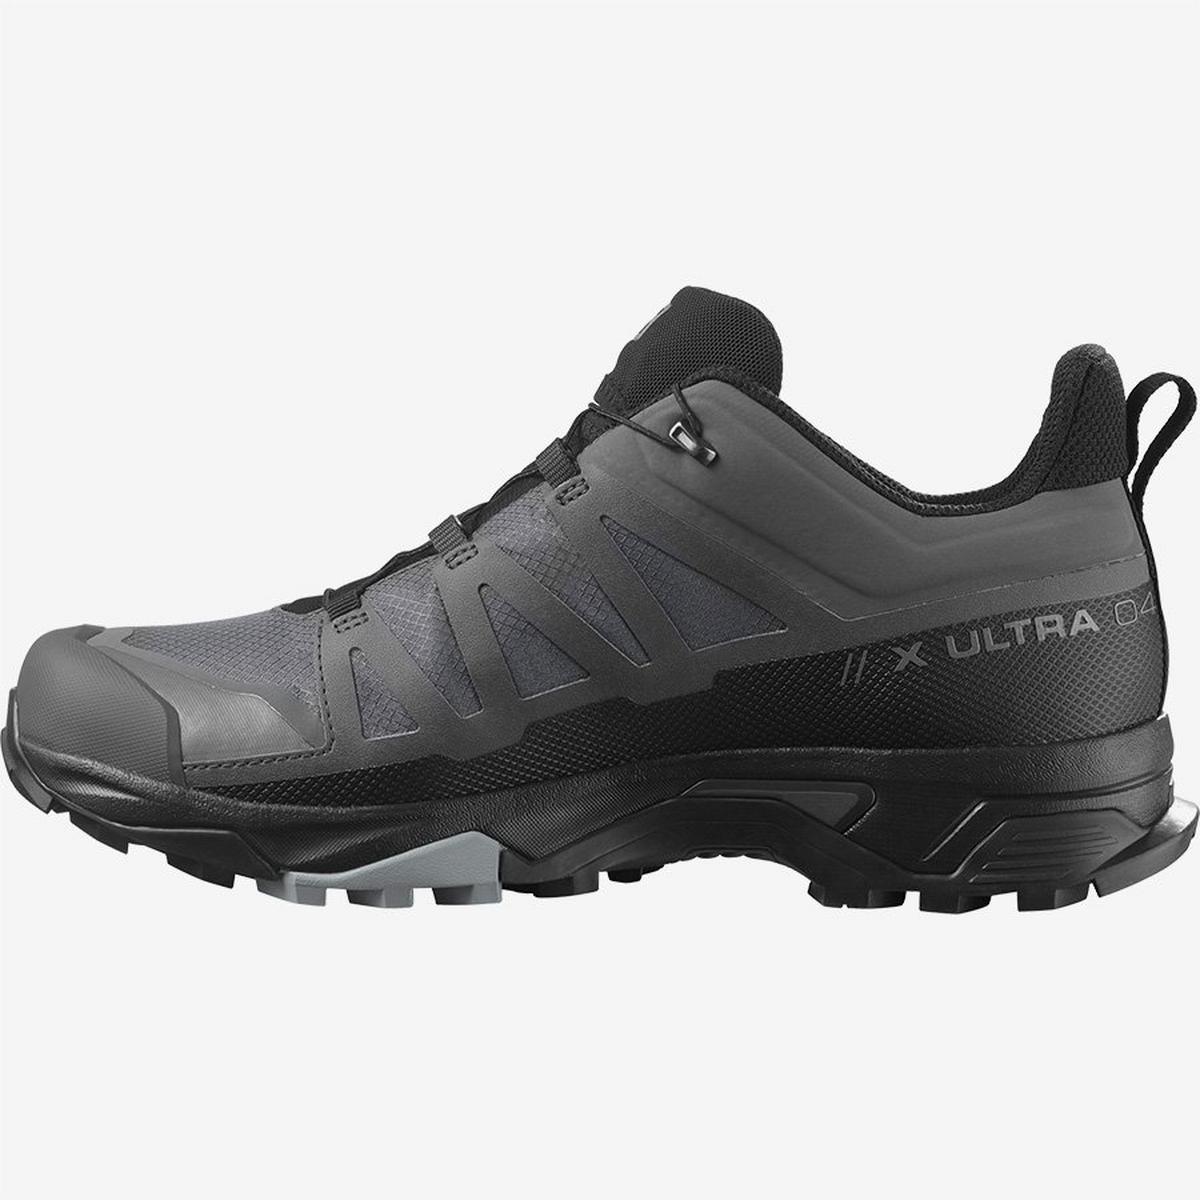 Salomon Men's X Ultra 4 GORE-TEX Walking Shoes - Magnet Black